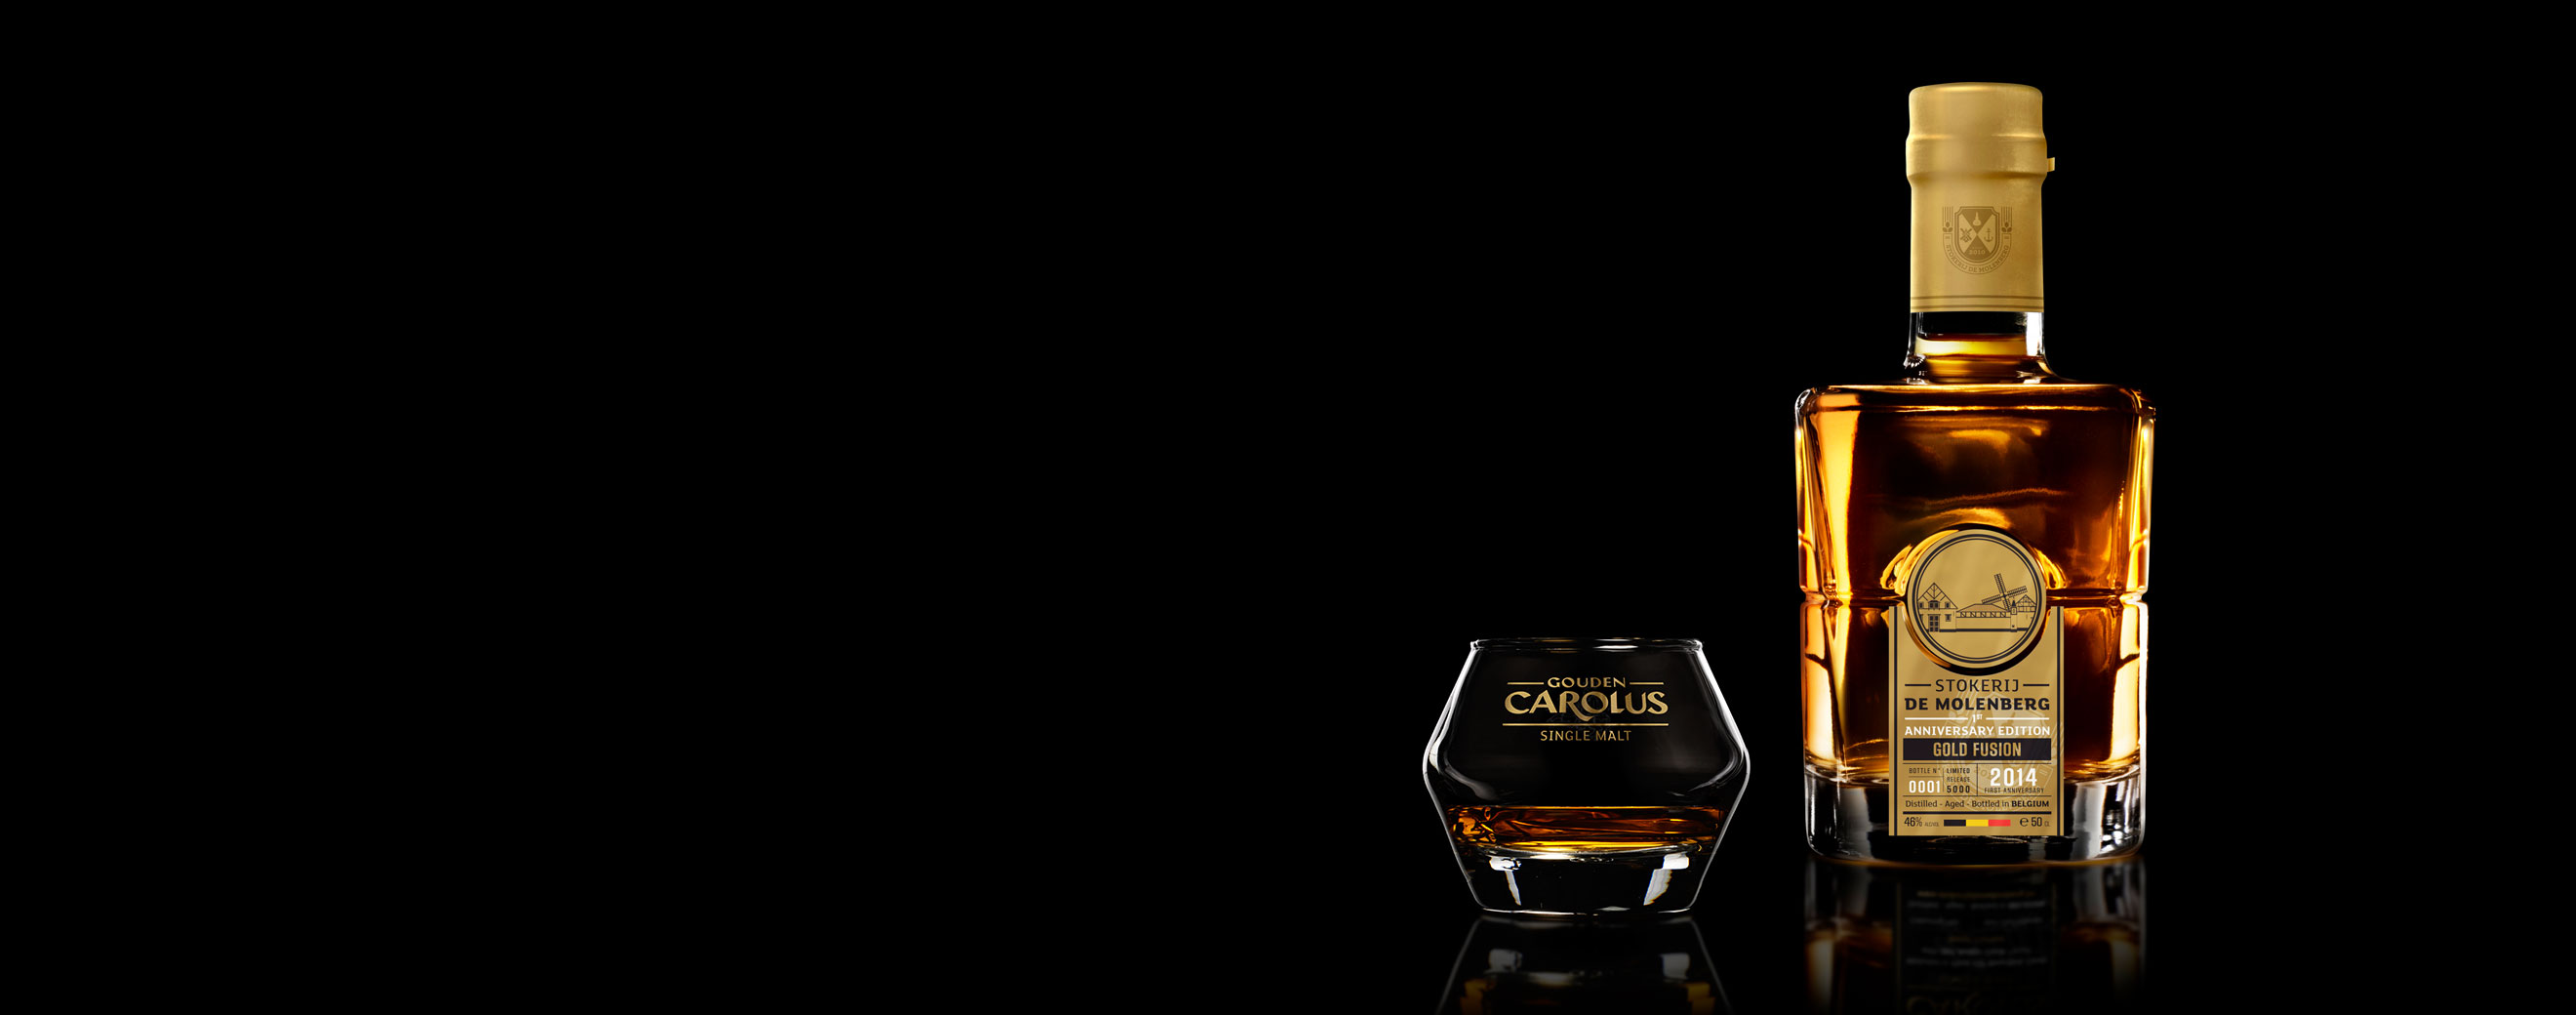 Gold Fusion 2014 Whisky Stokerij De Molenberg